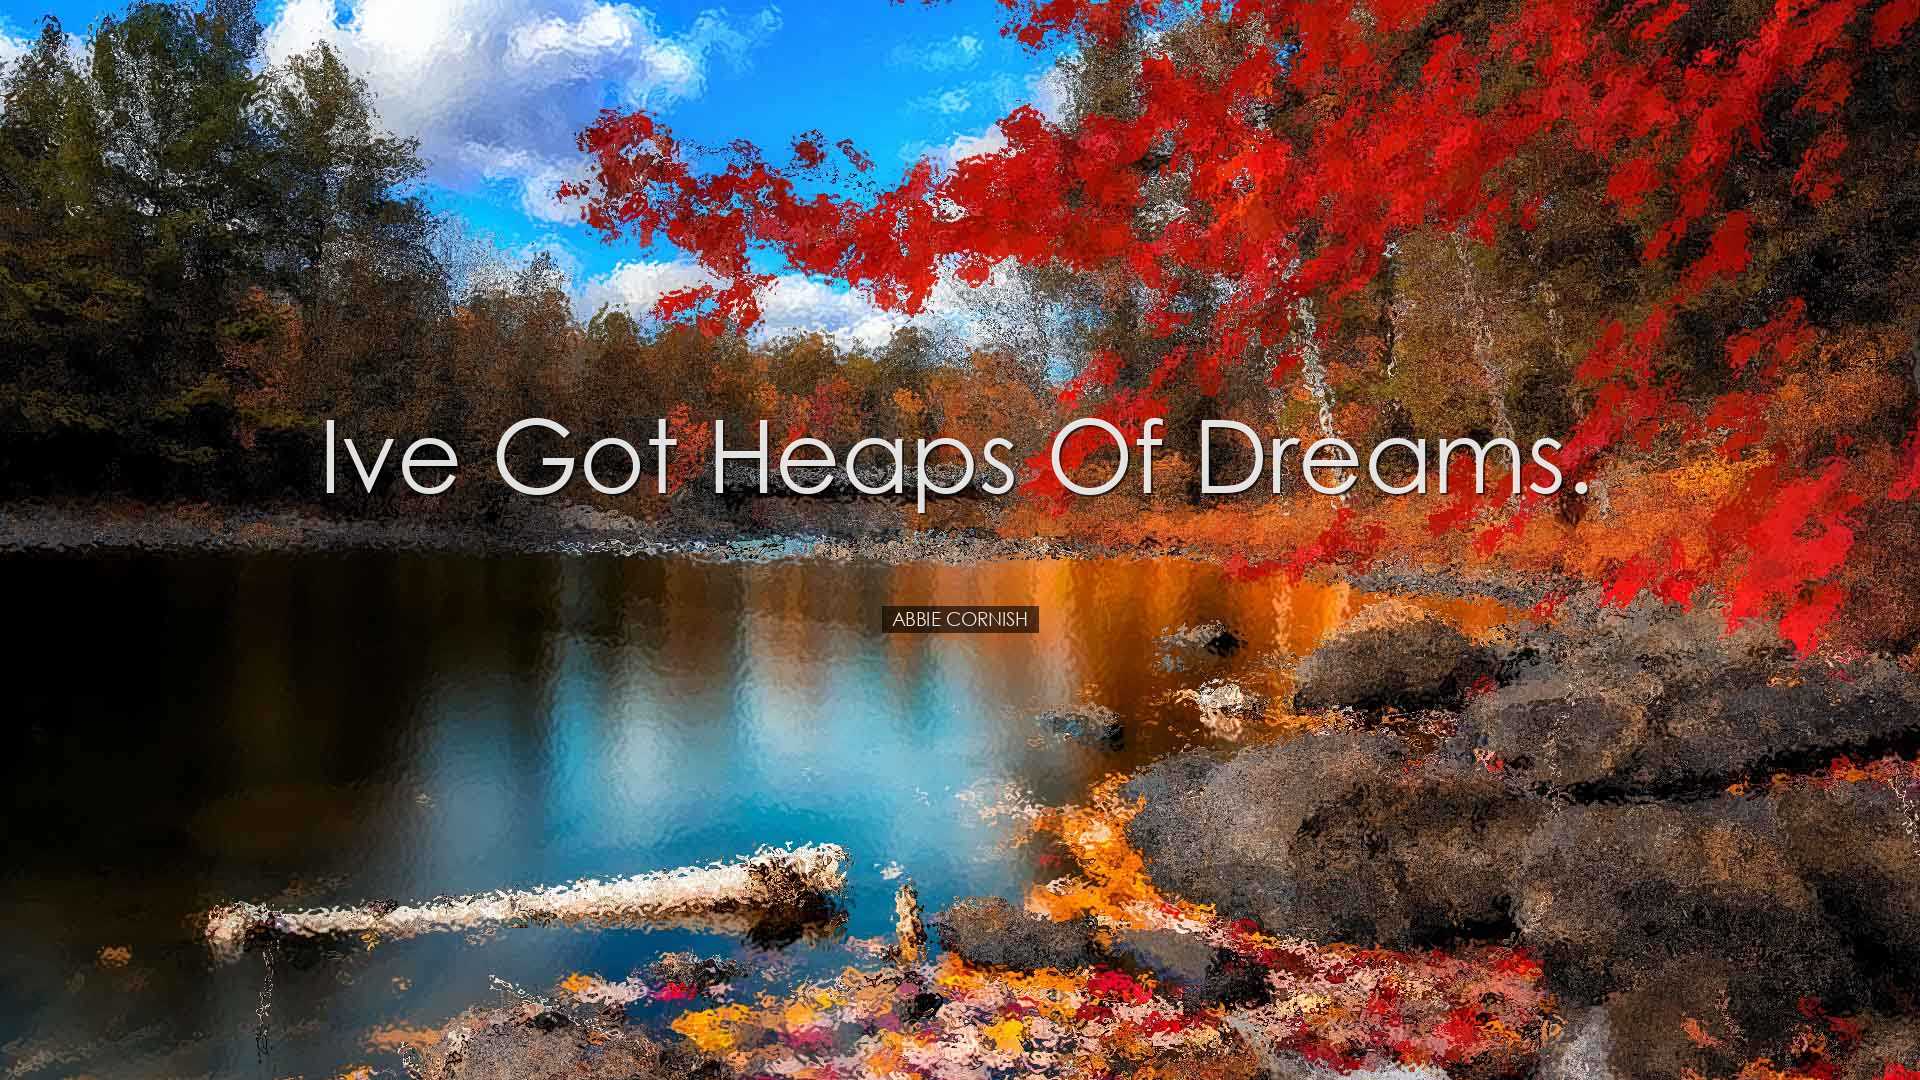 Ive got heaps of dreams. - Abbie Cornish